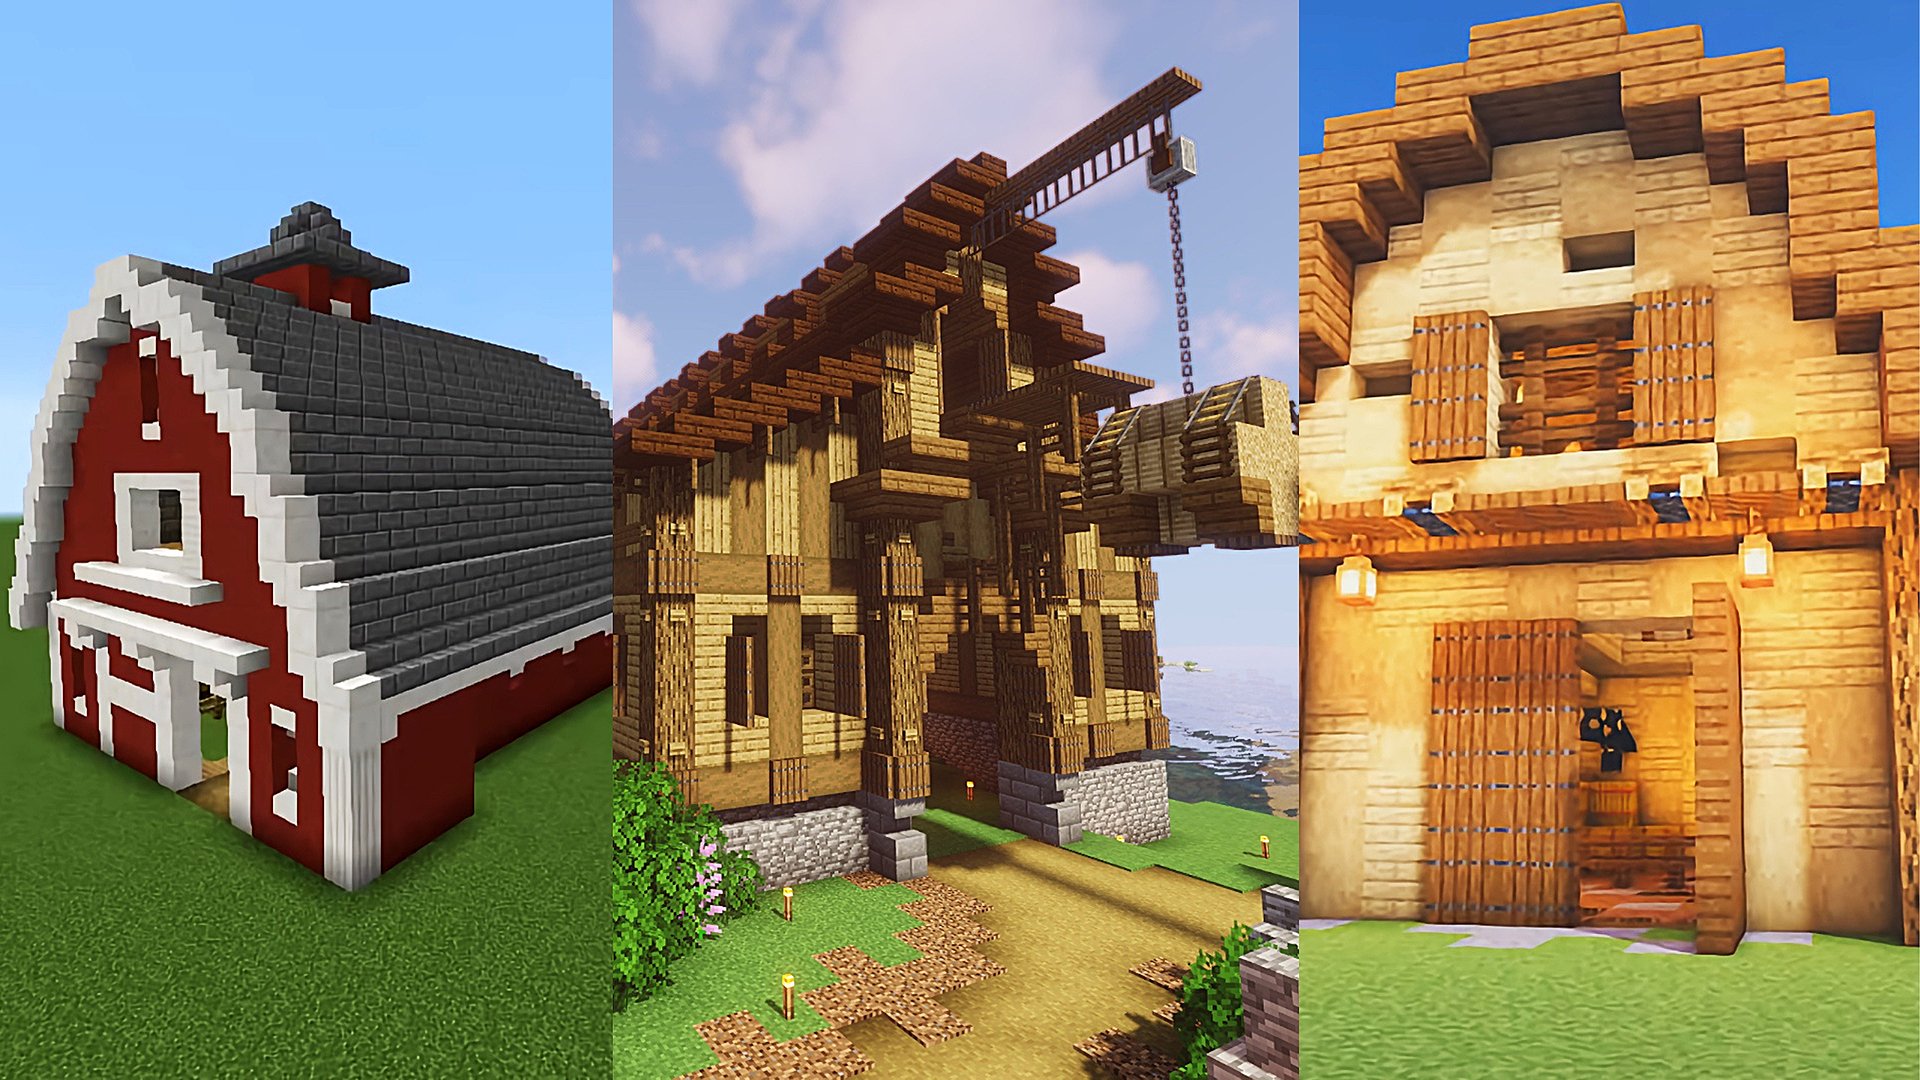 The best Minecraft barn ideas in